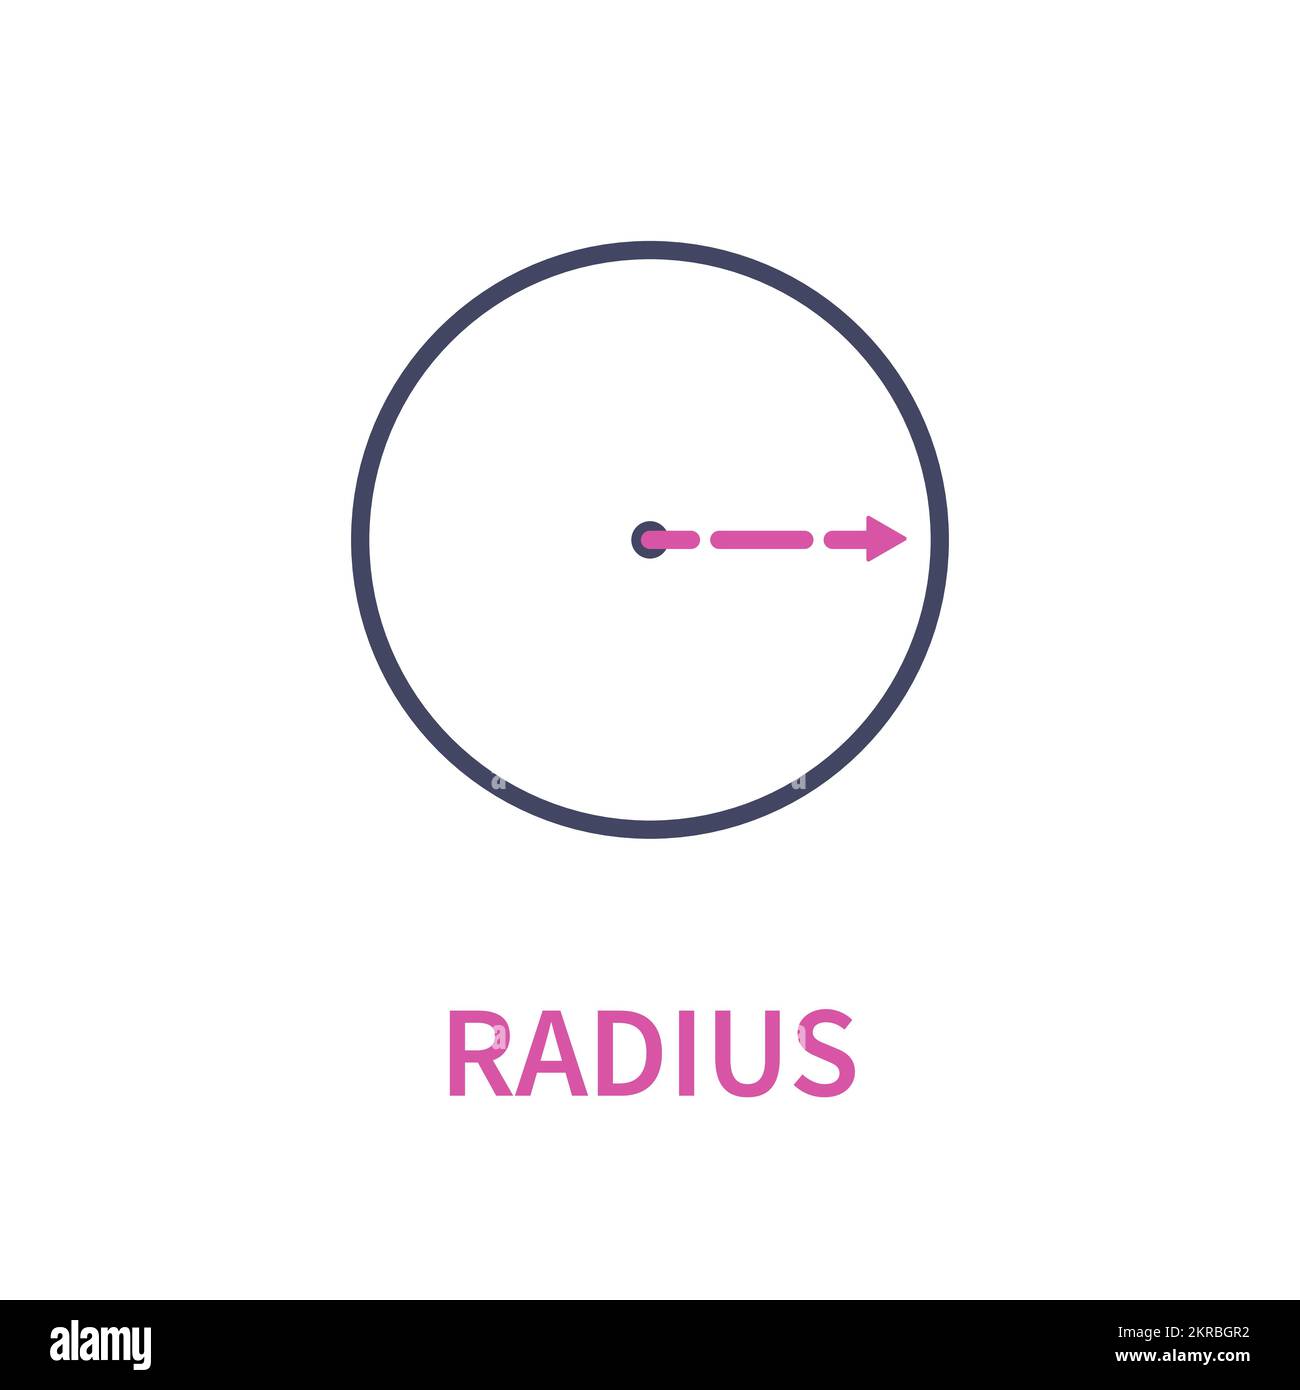 Radius circle geometric diagram icon Stock Vector